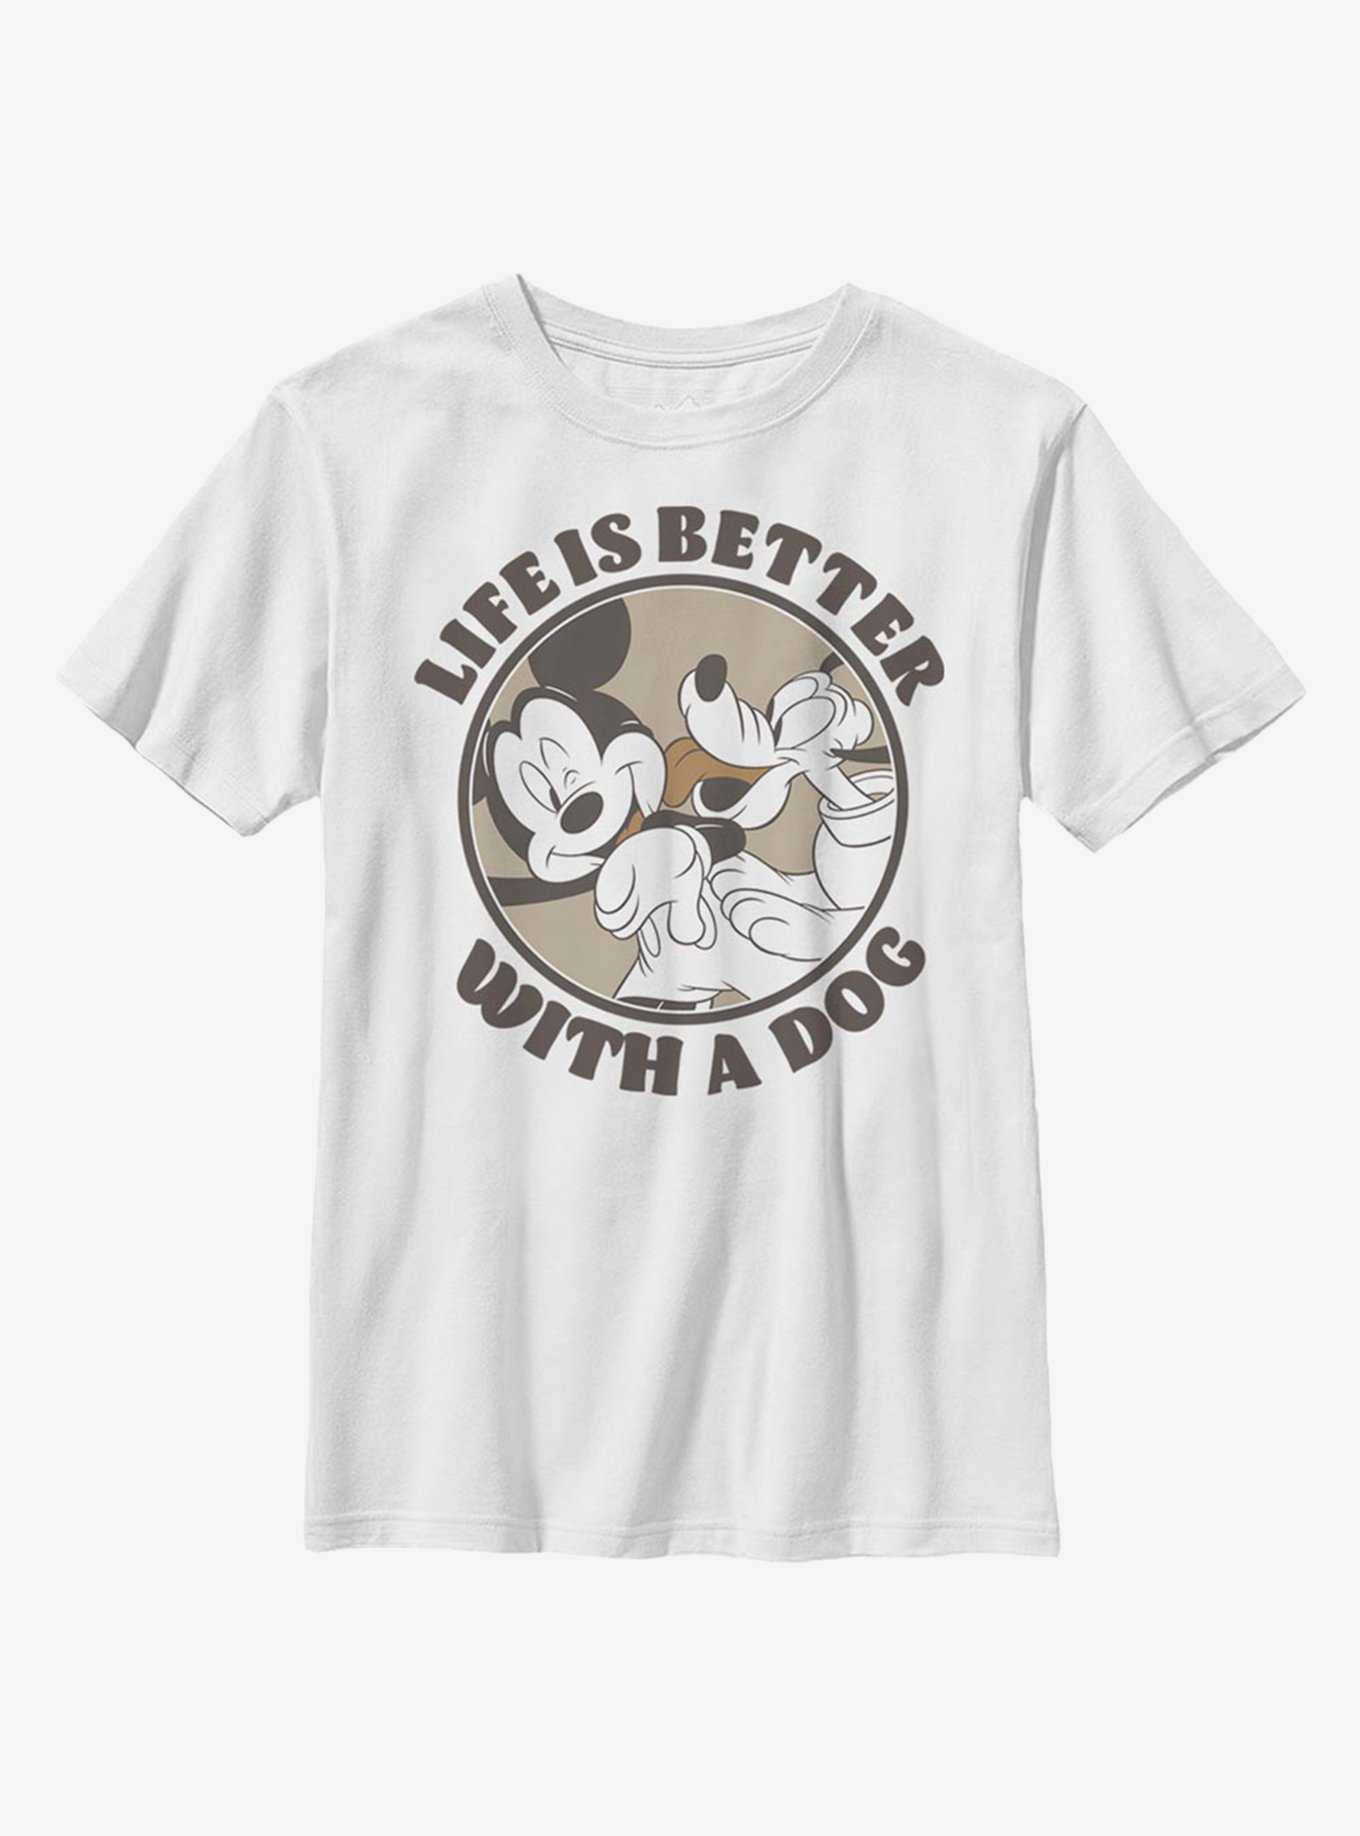 Disney Mickey Mouse Dog Life Youth T-Shirt, , hi-res